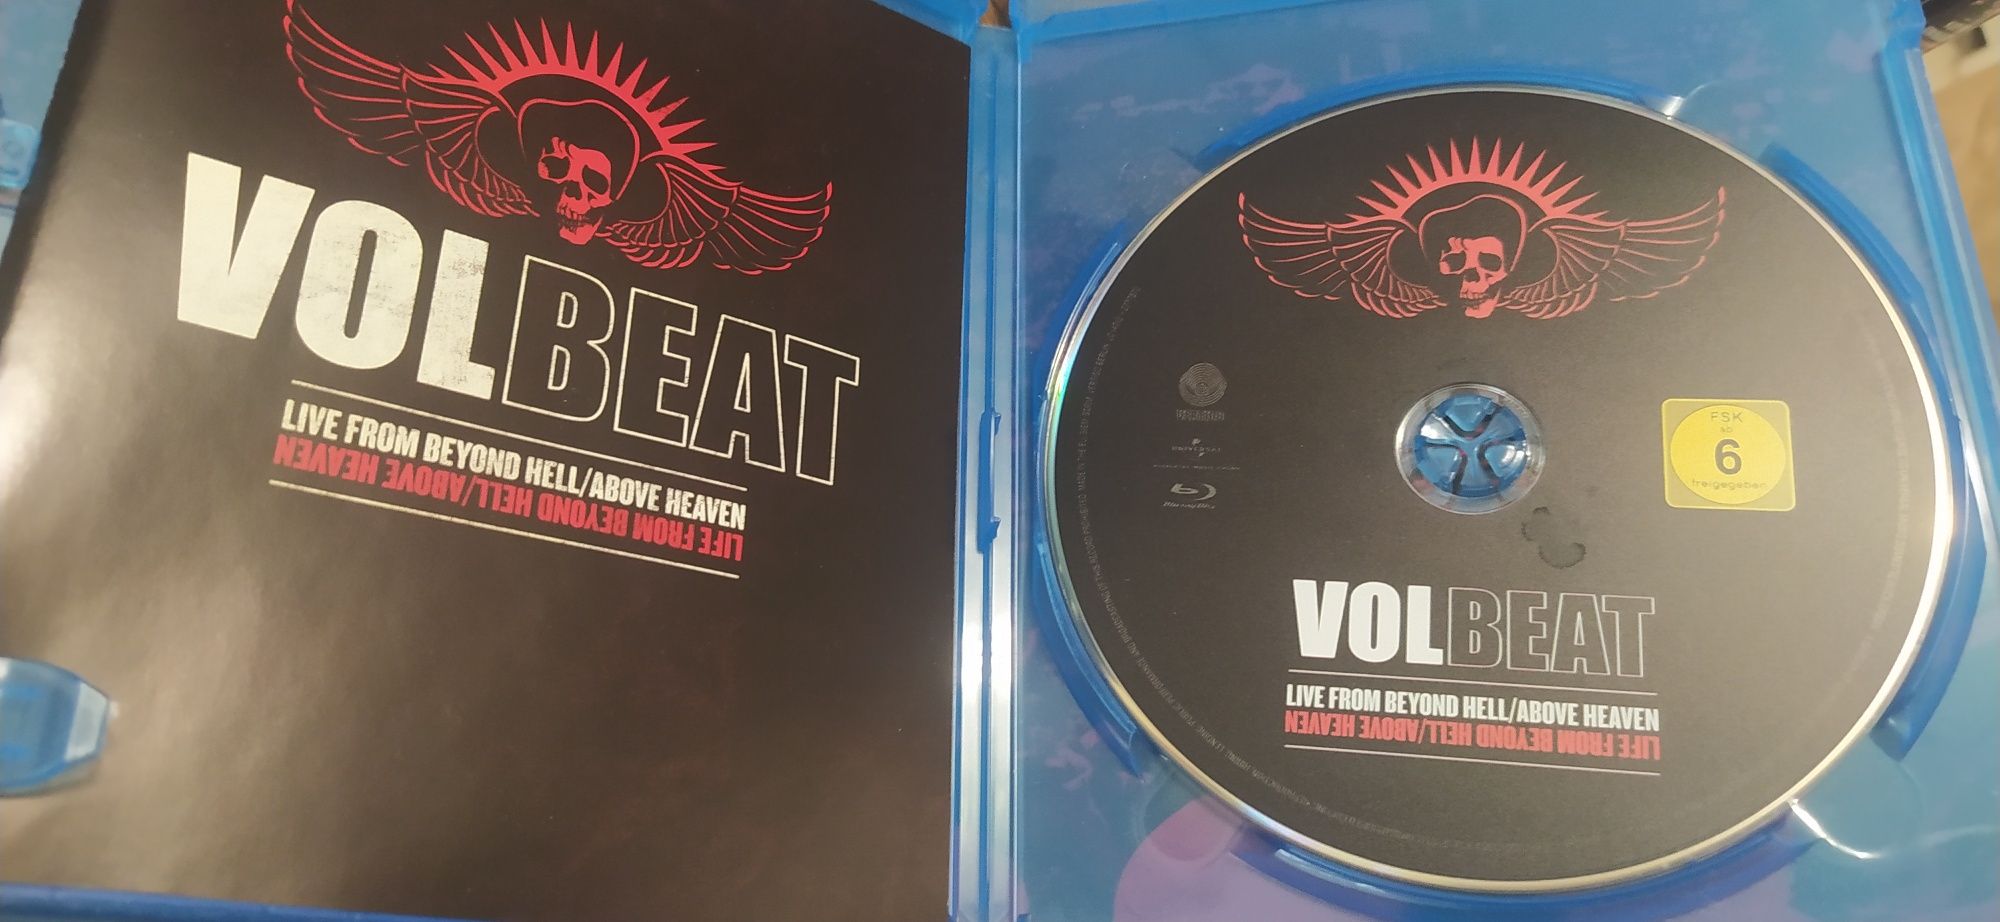 Volbeat Blu-ray polecam!